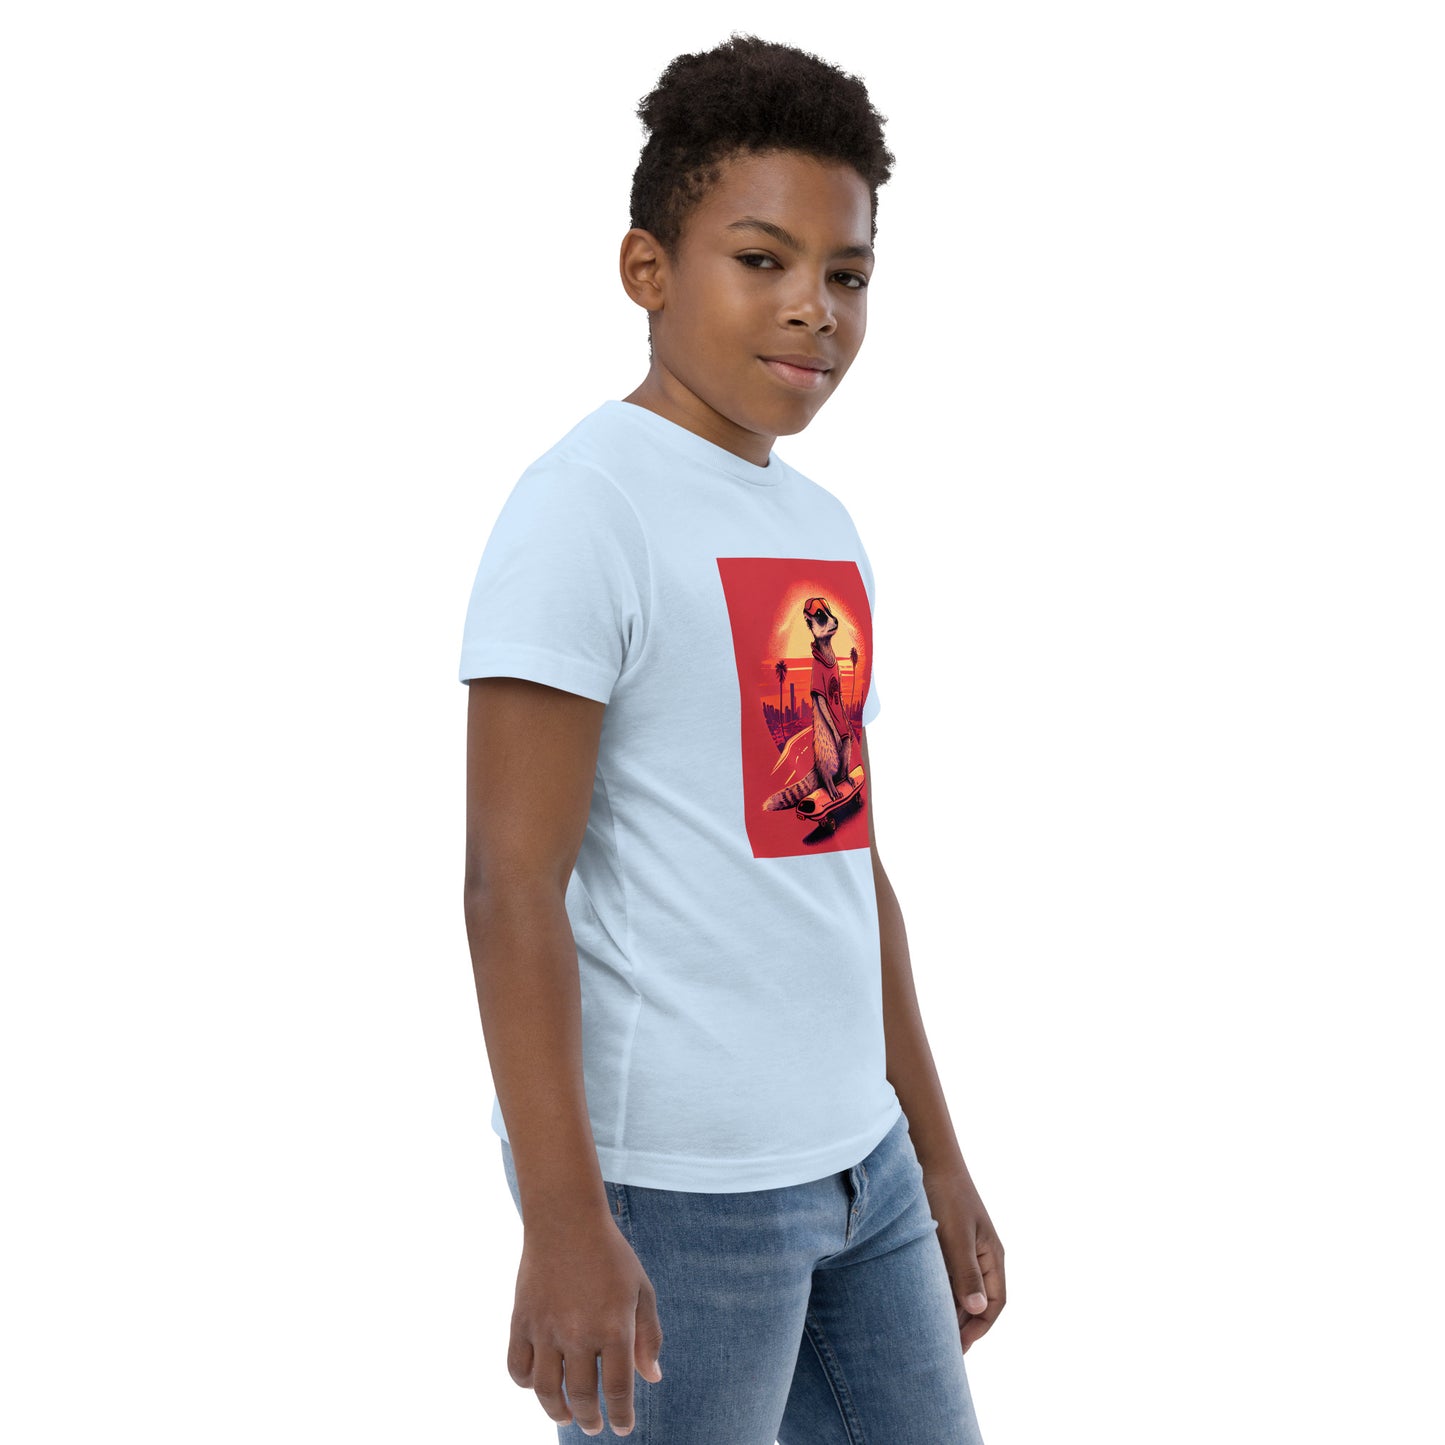 Tobi the Meerkat: Youth jersey t-shirt